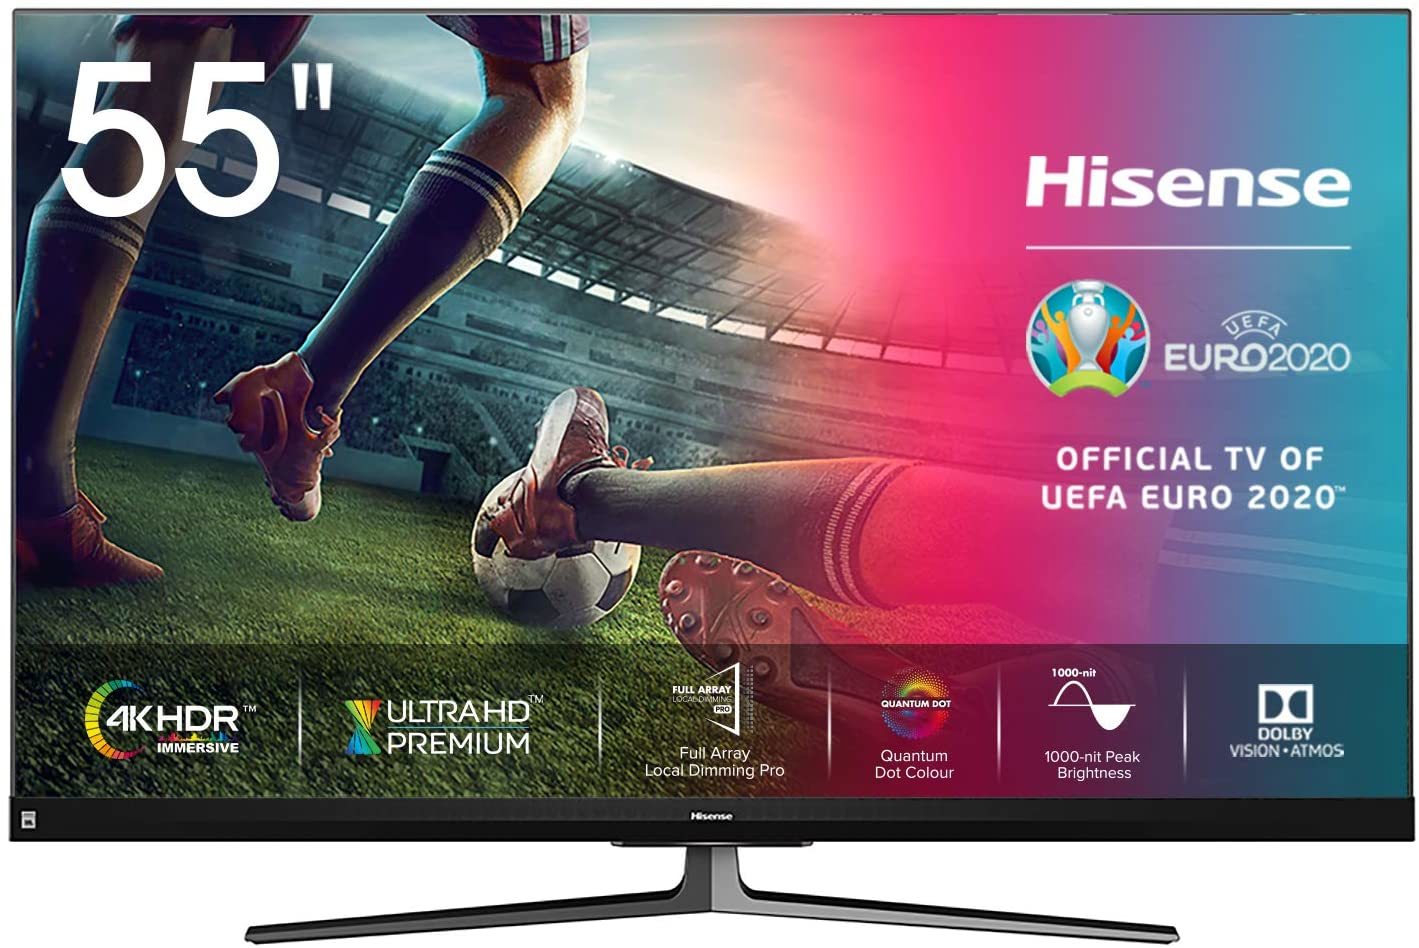 18++ 55 inch smart tv price in uae ideas in 2021 